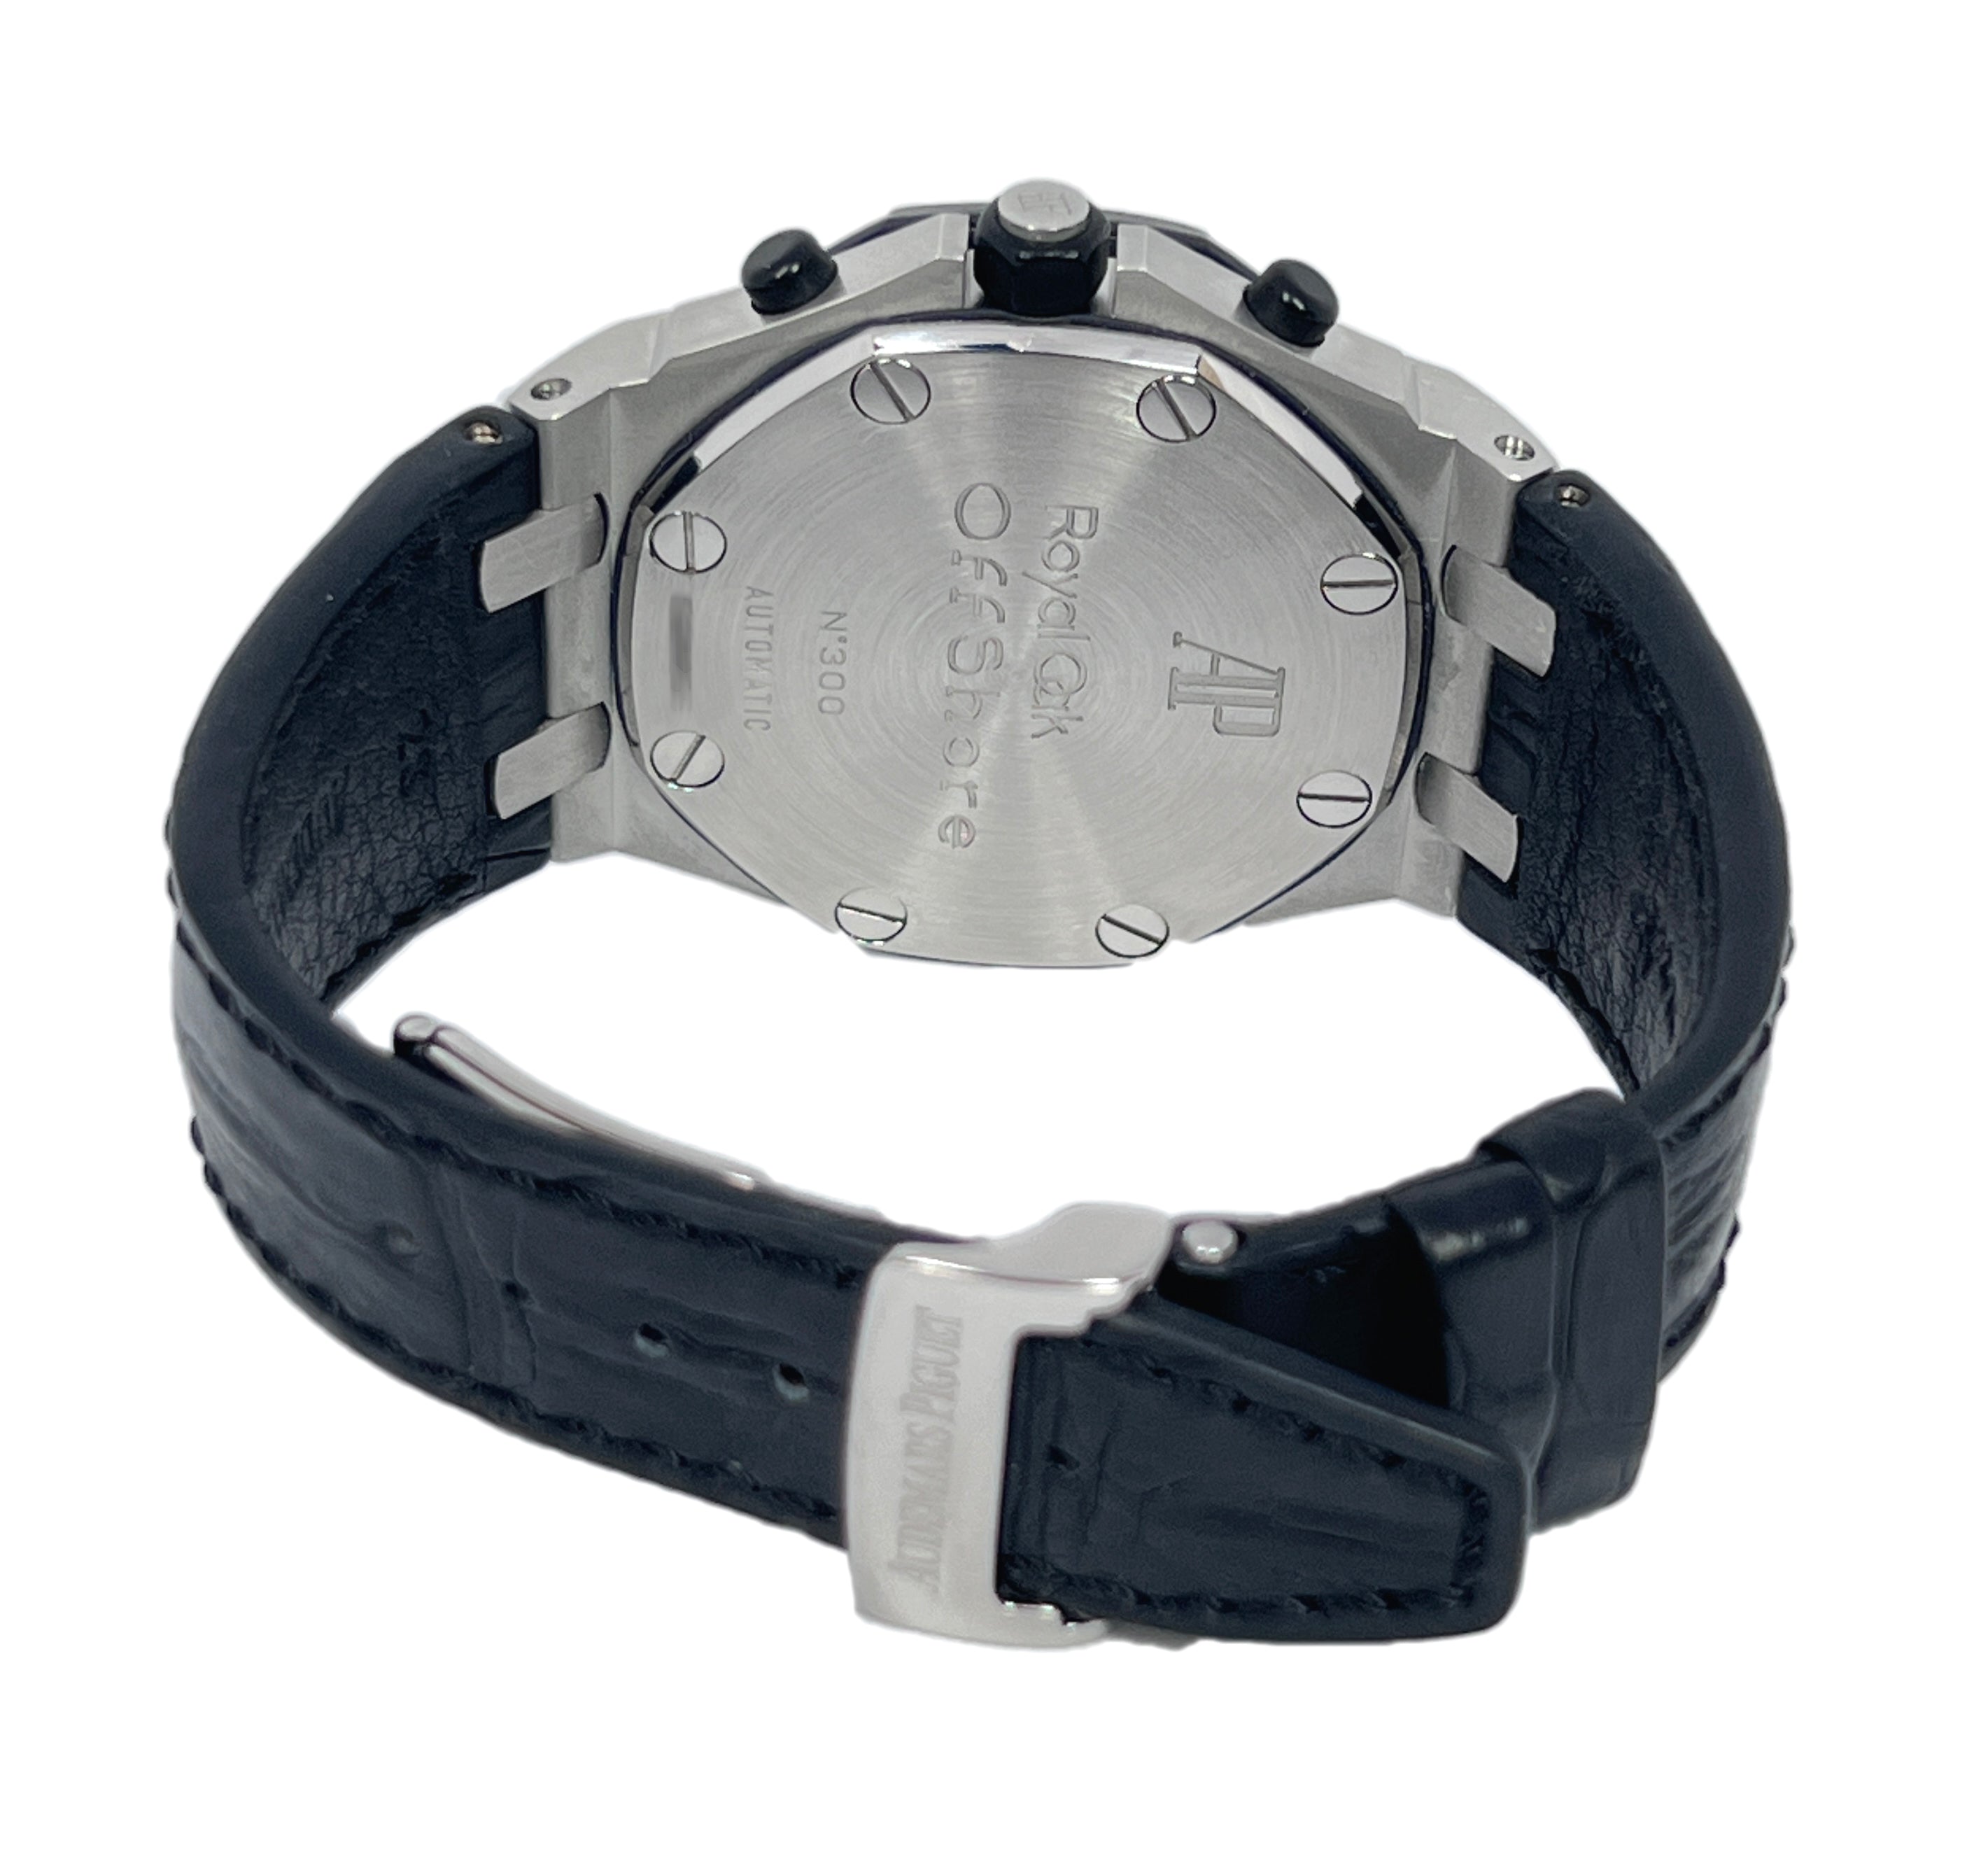 Audemars Piguet Royal Oak Offshore Chronograph Stainless steel Man's Watch